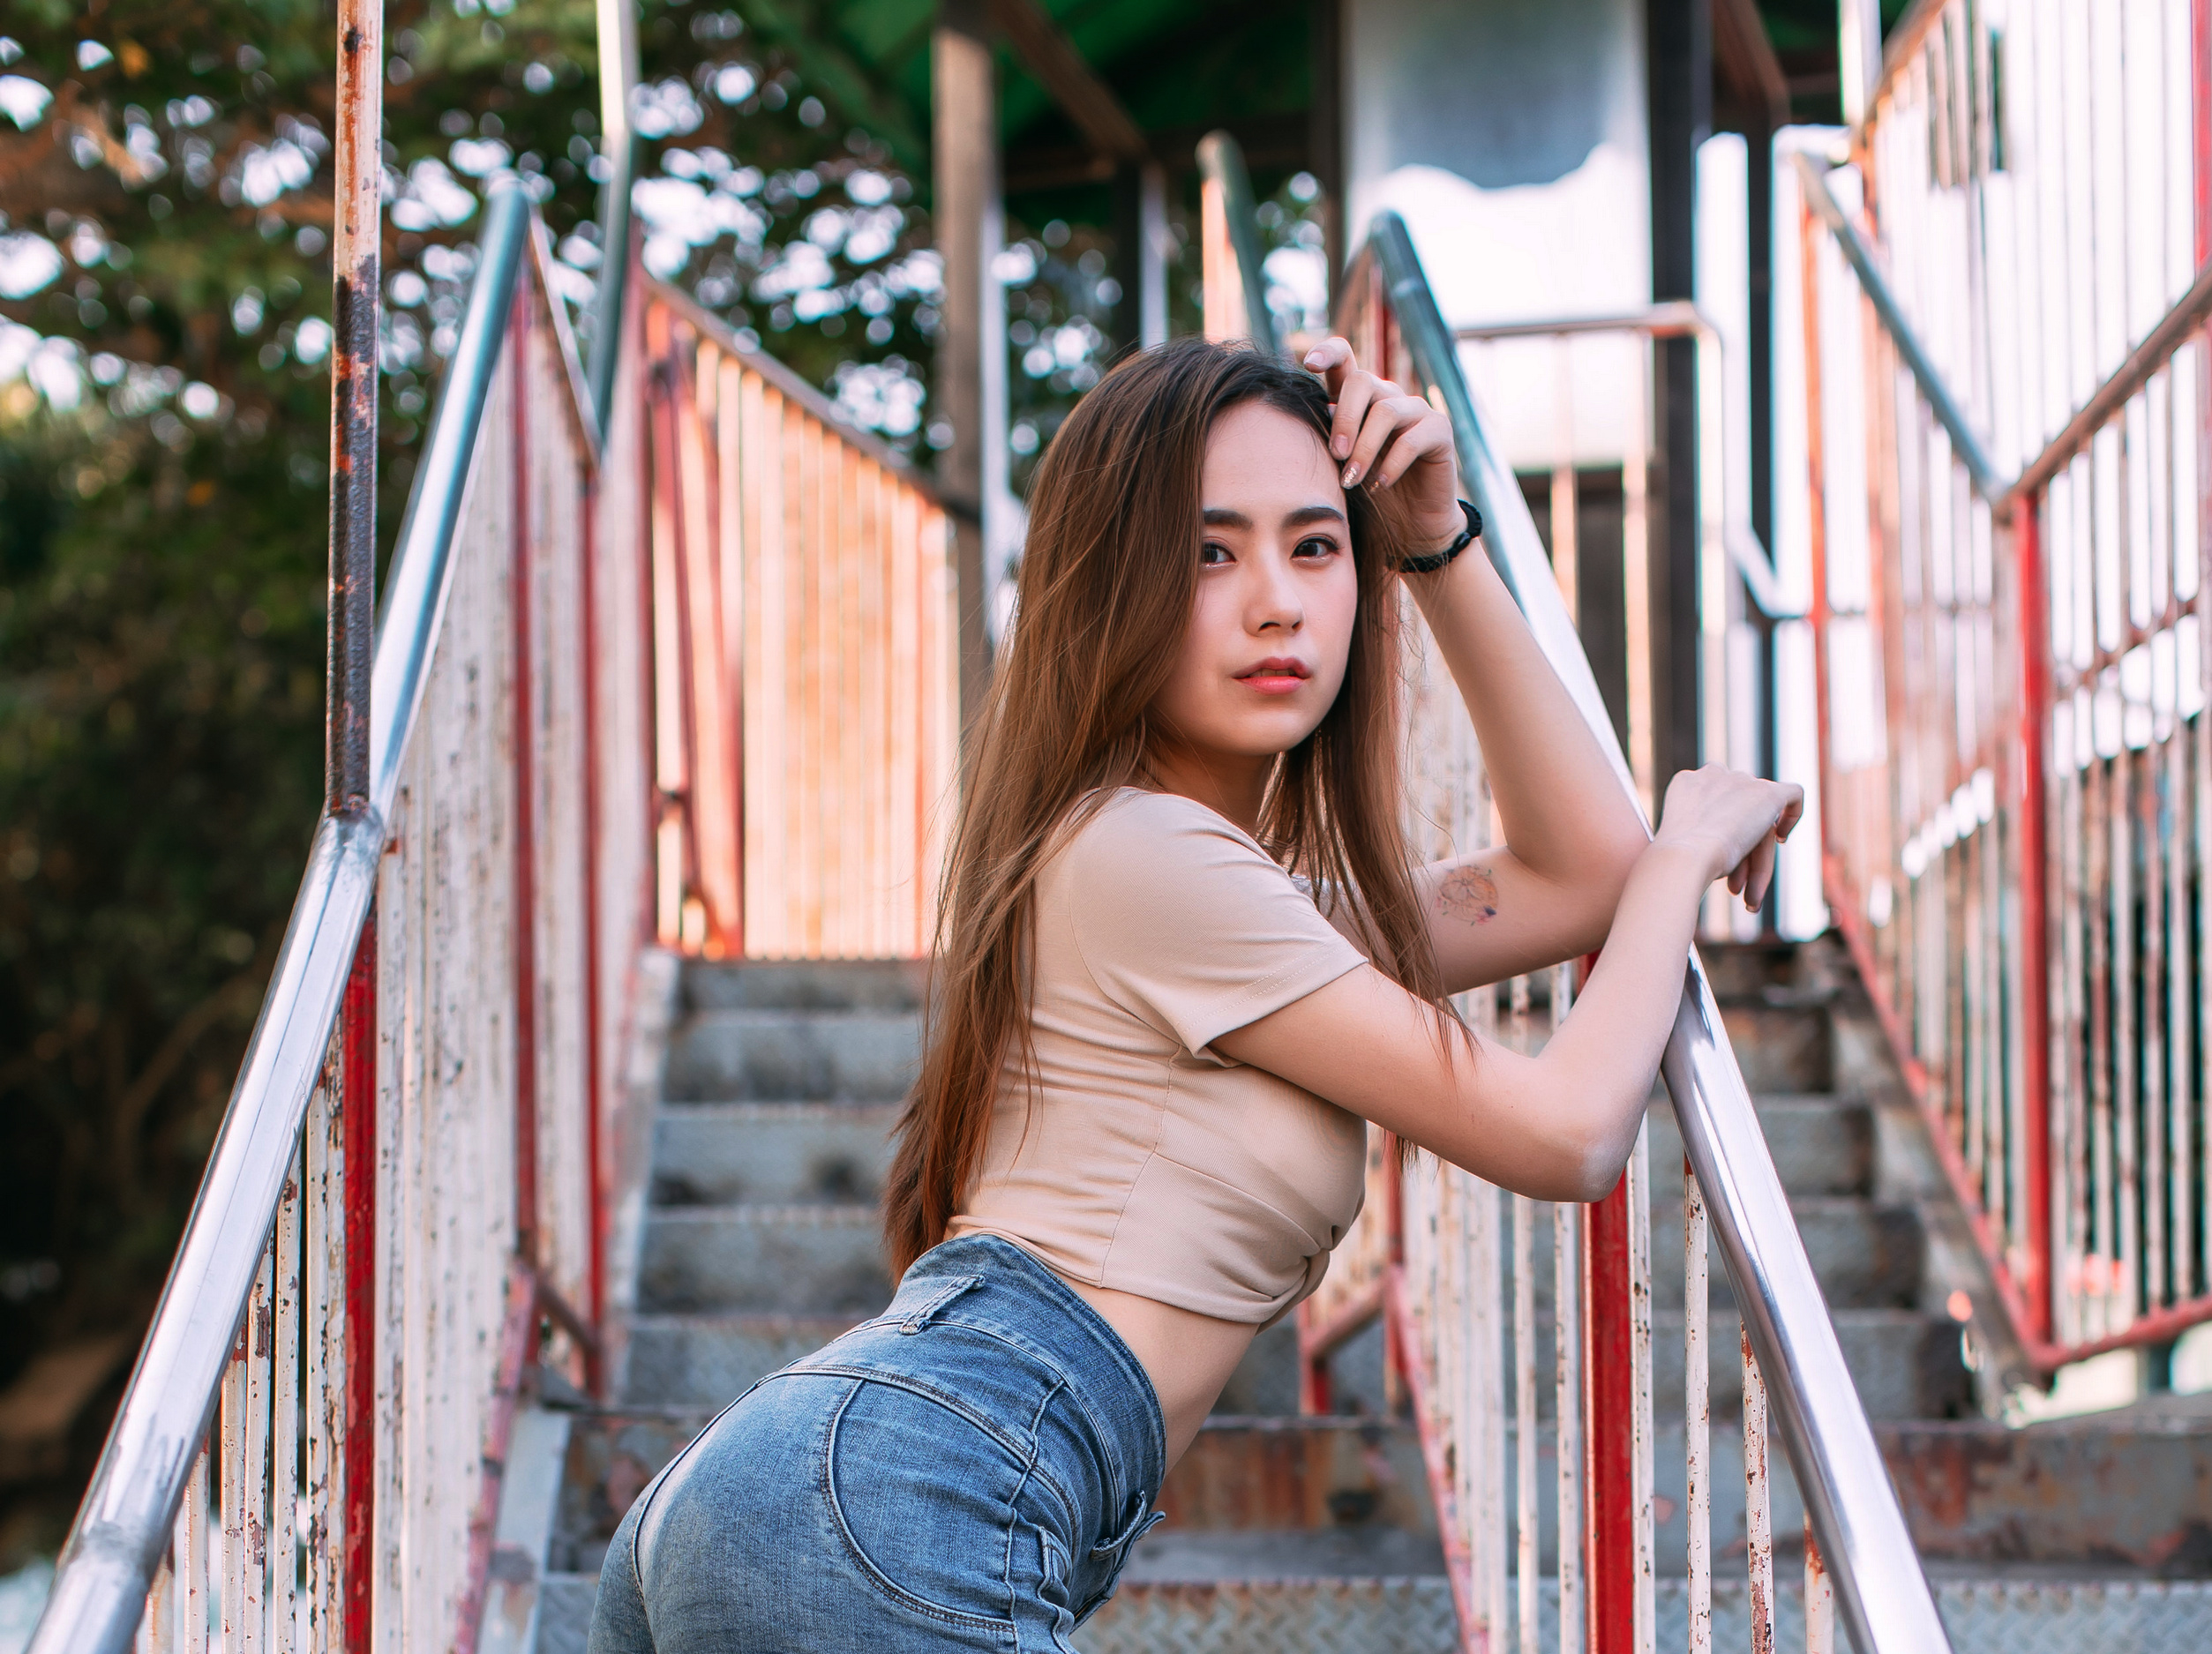 Asian Model Women Long Hair Brunette Stairs Railings Leaning Jeans Short Tops Tattoo Depth Of Field  2507x1875